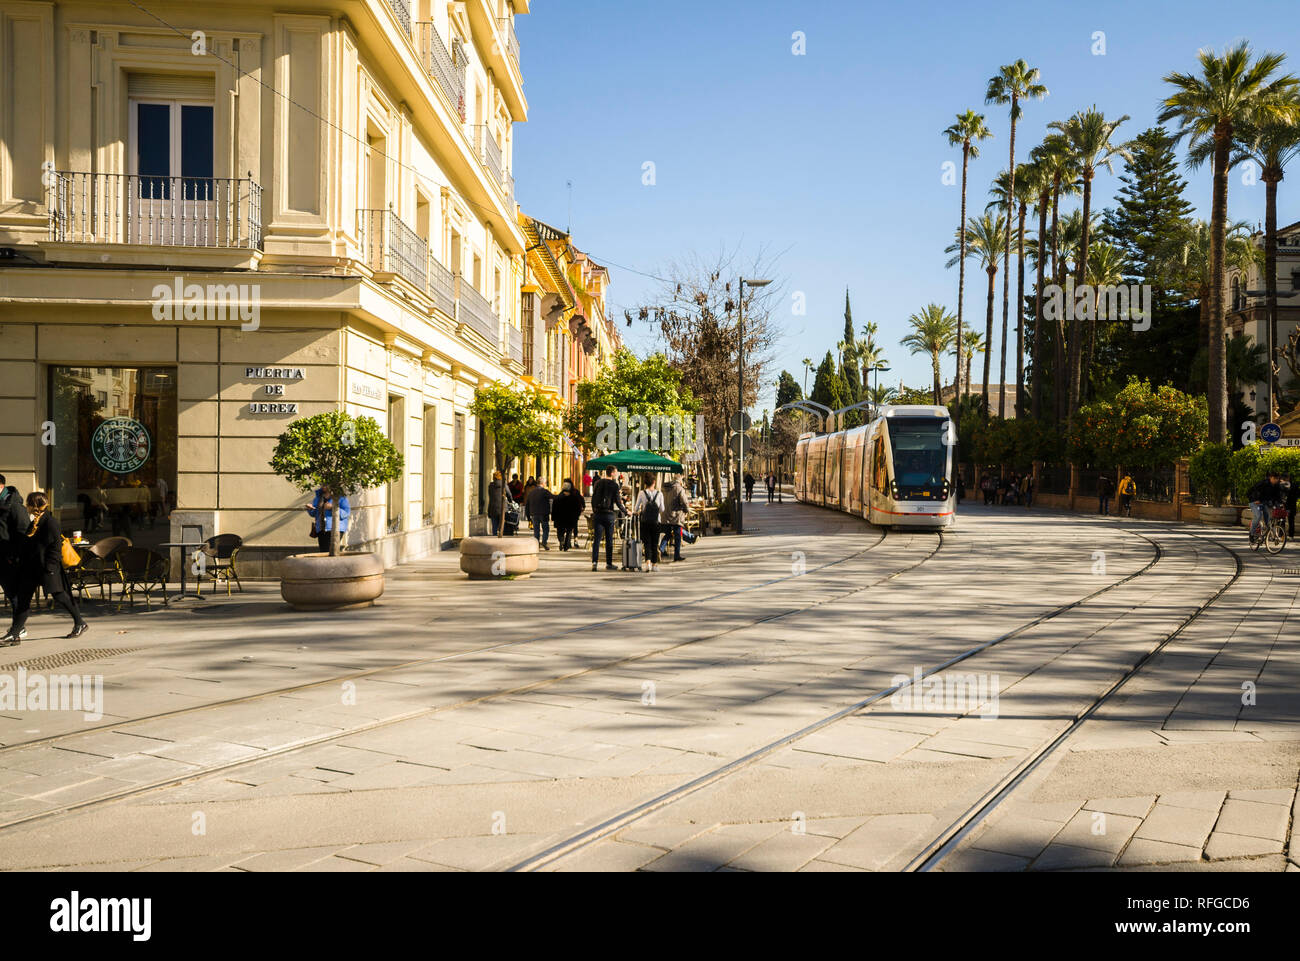 The tram (tranvia) public transport system in Seville, Plaza nueva, Andalucia, Spain. Stock Photo